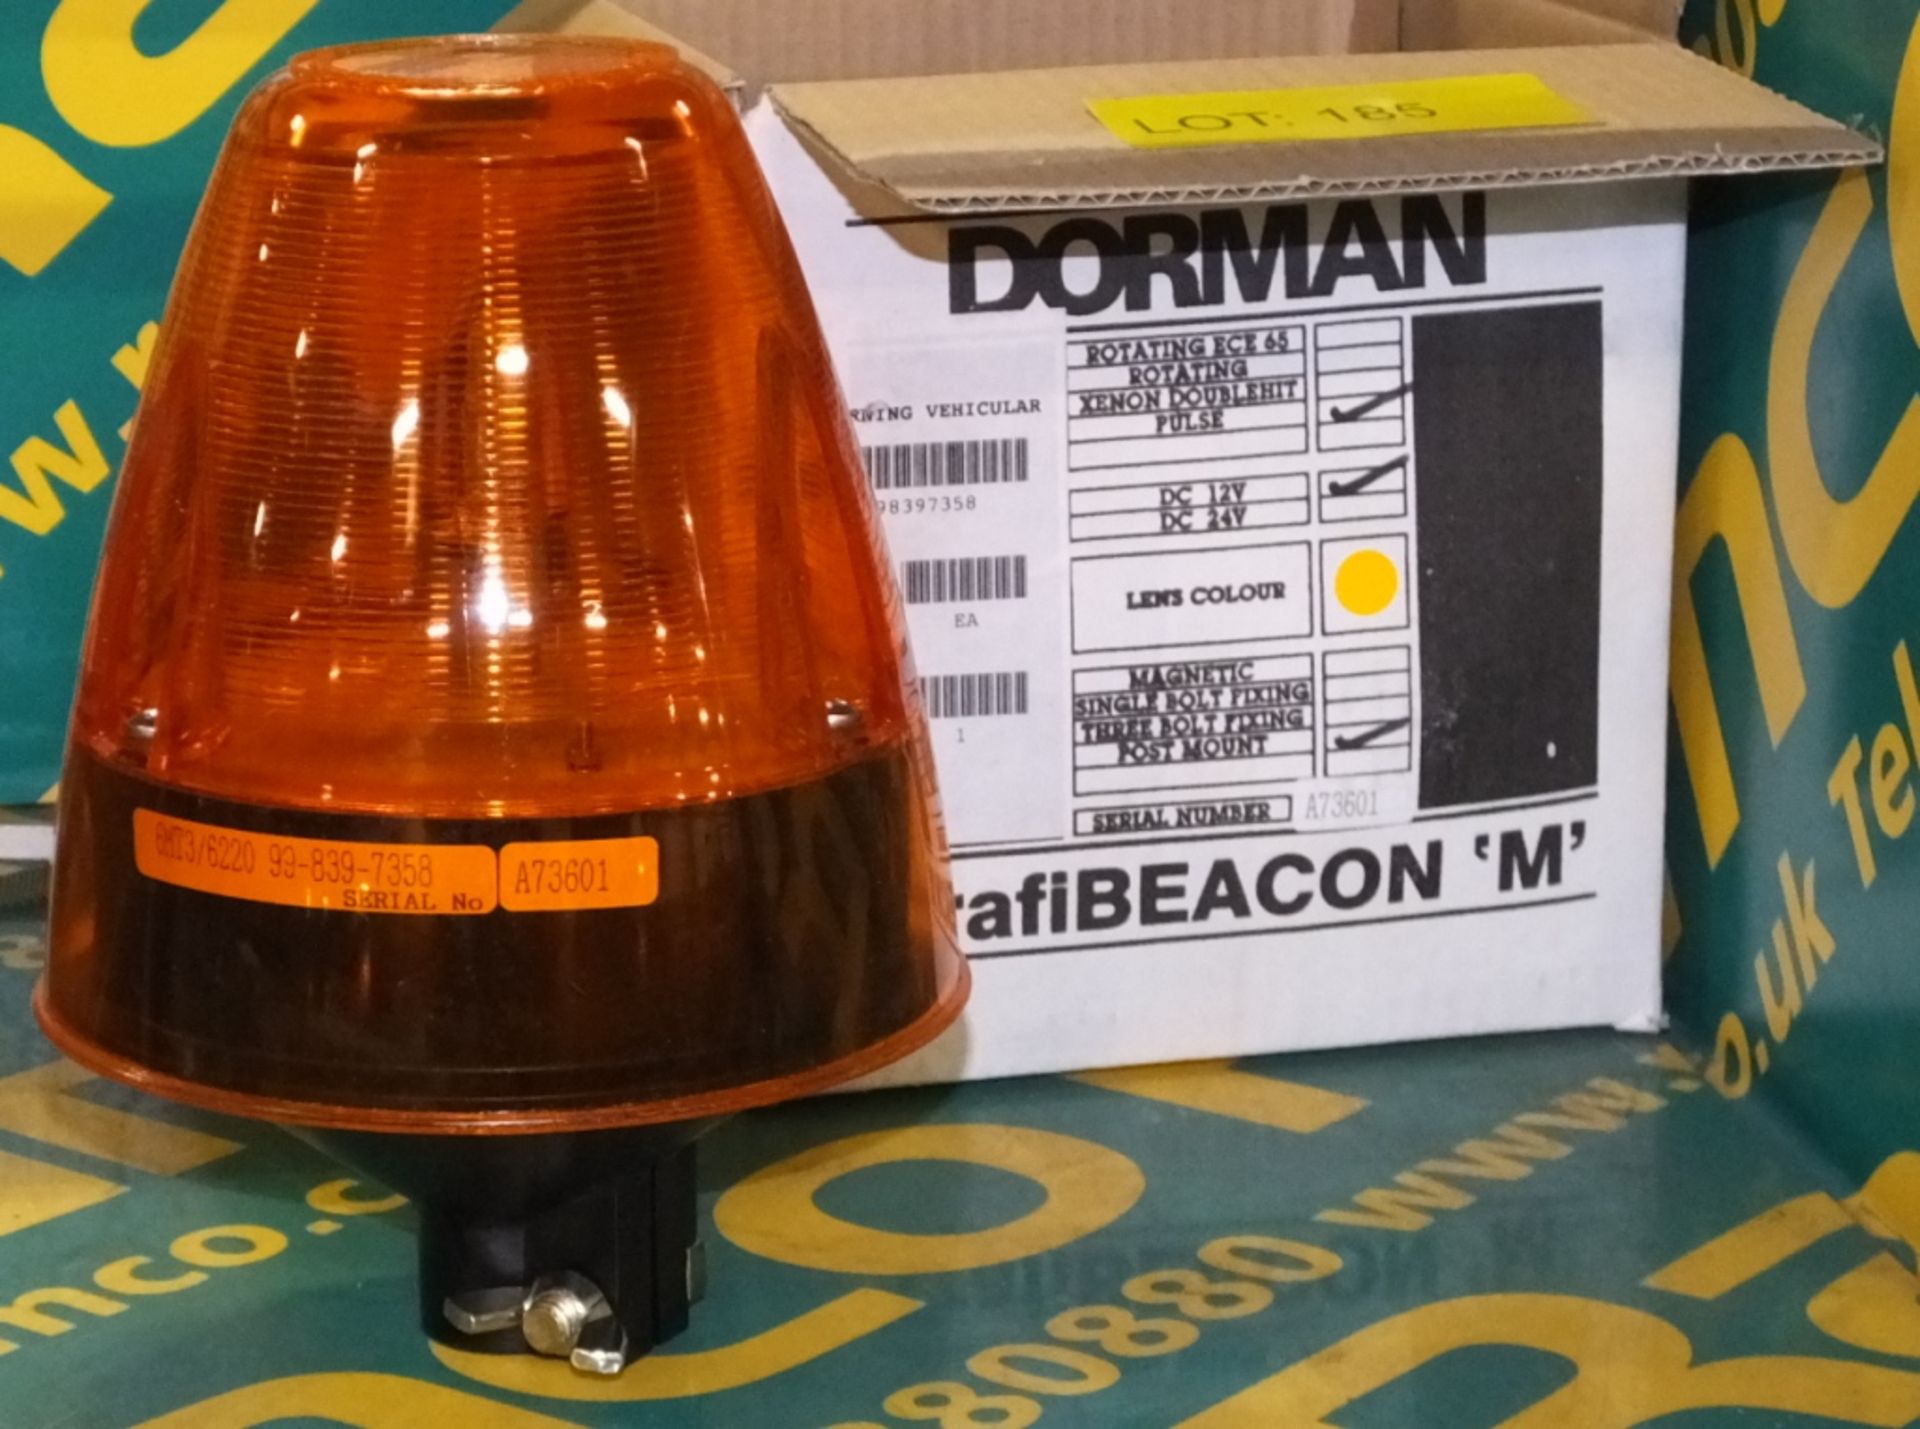 Dorman TrafiBeacon "M" hazard light - Image 3 of 3